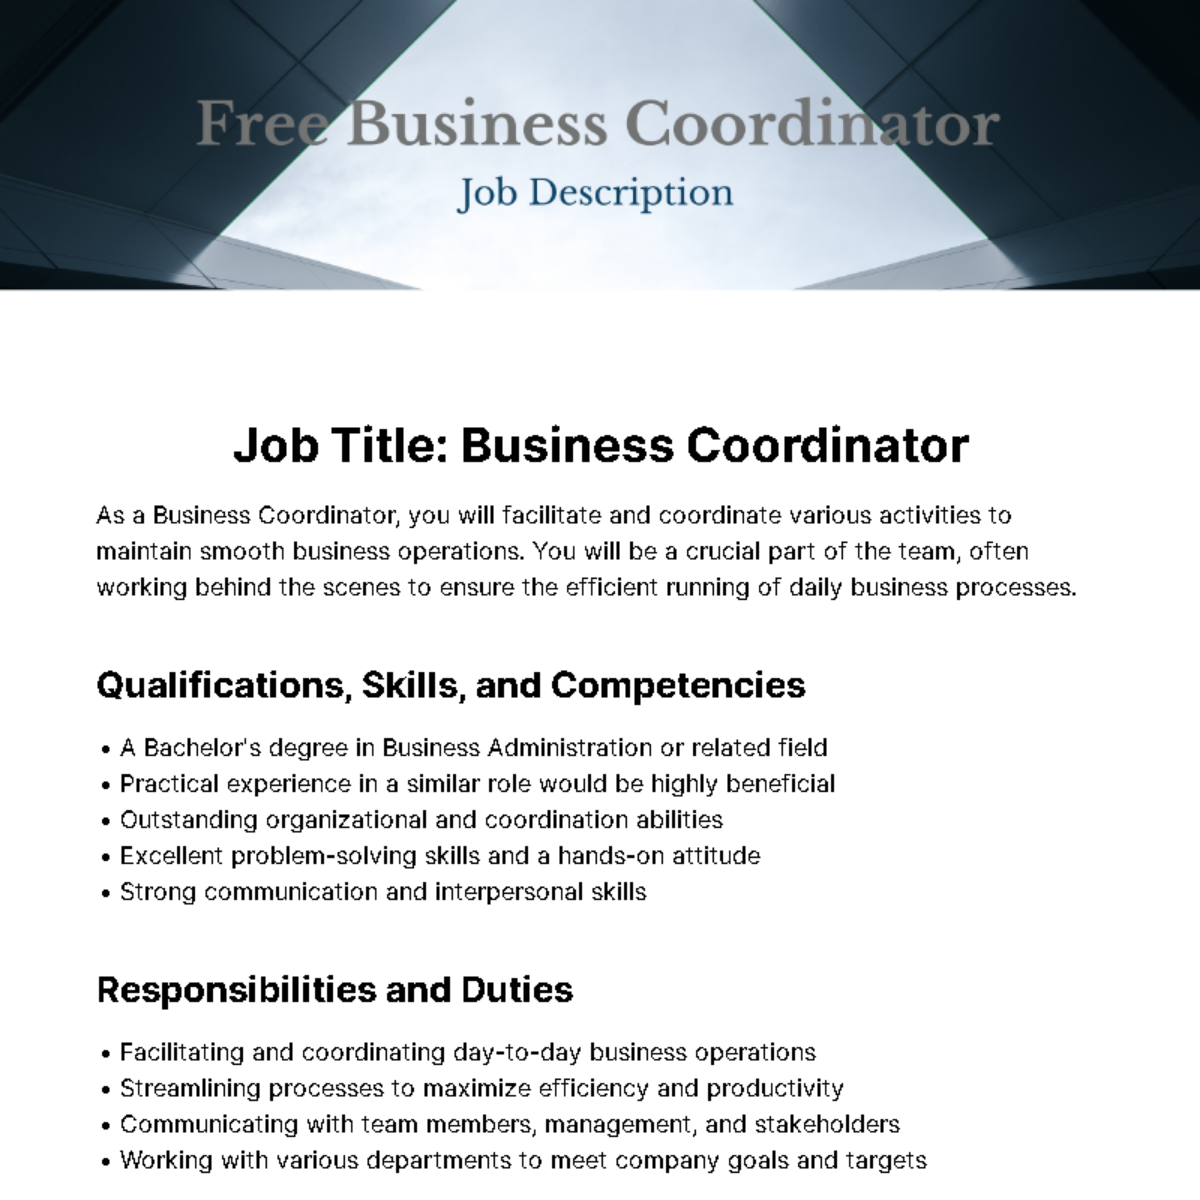 Free Business Coordinator Job Description Template